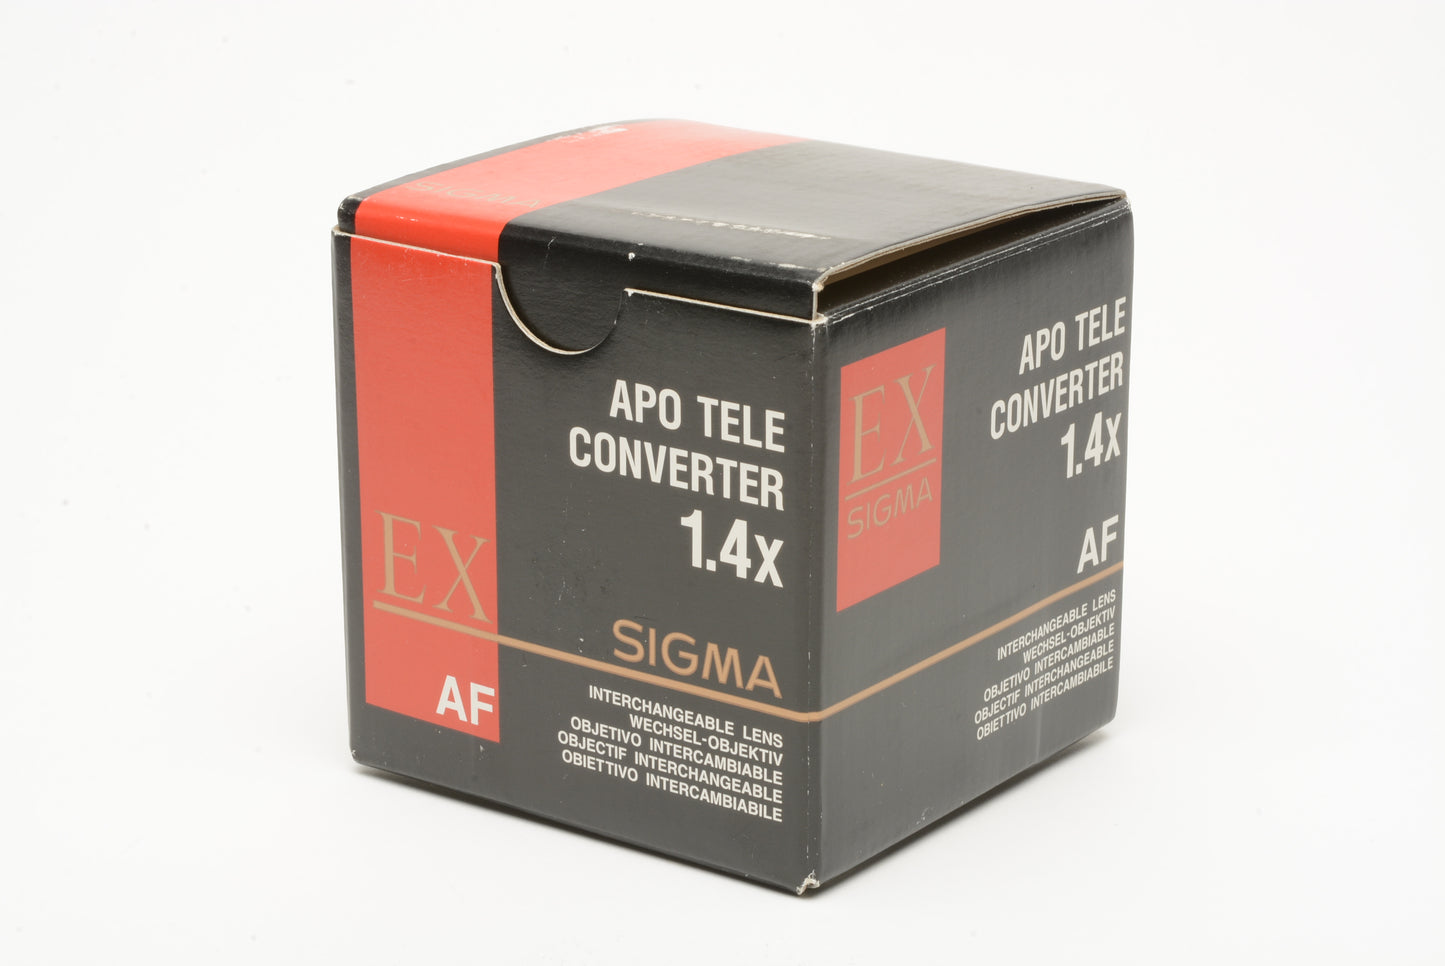 Sigma 1.4X AF APO Tele Converter EX, caps, case, boxed, barely used - Nikon AF